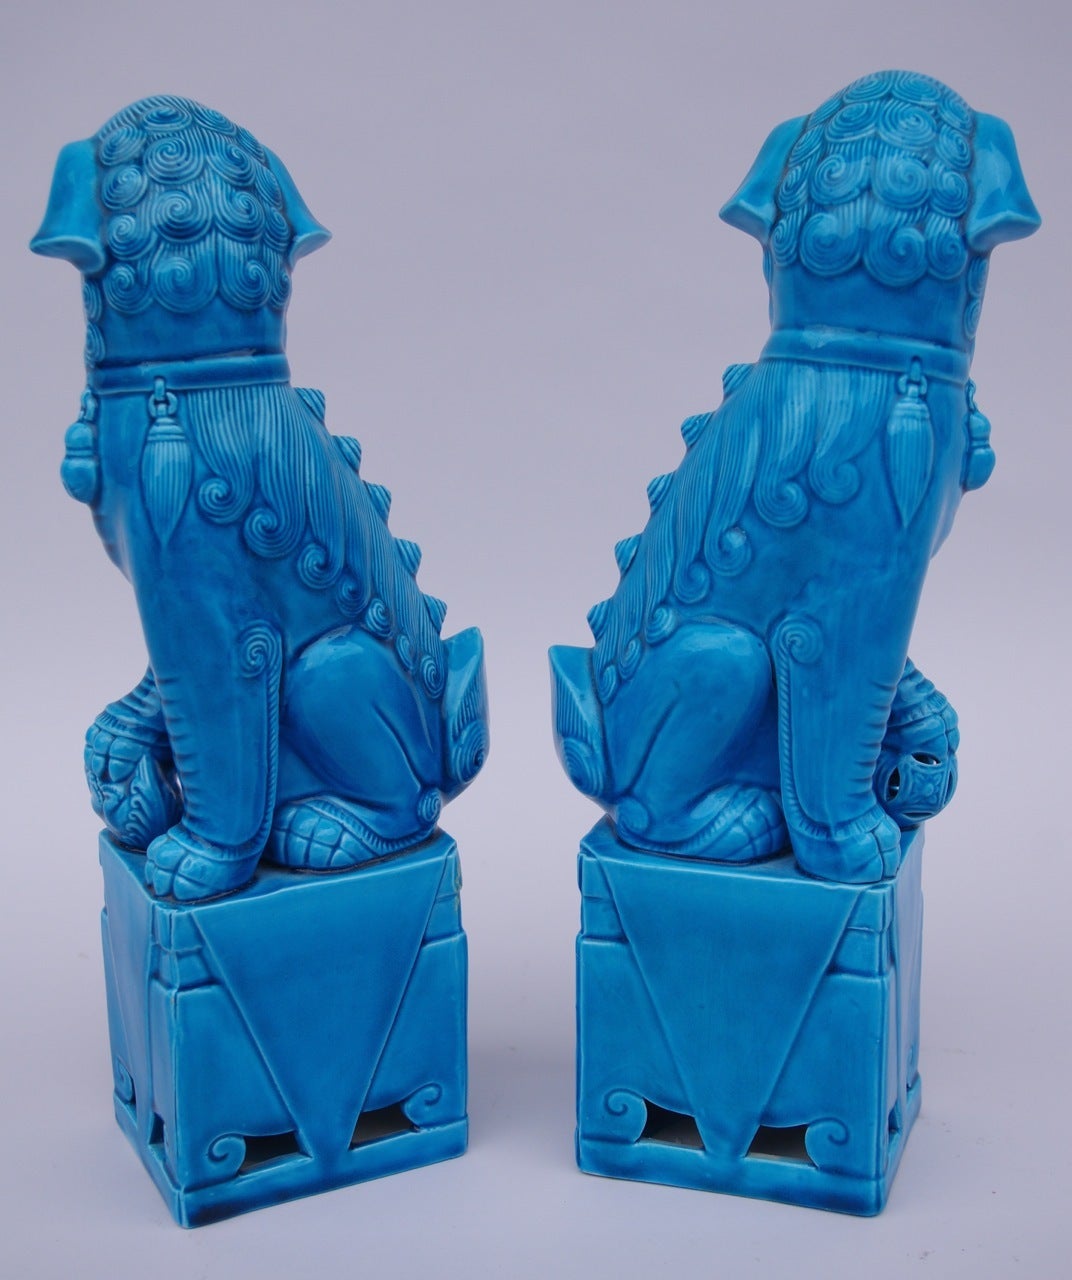 . Circa 1900
. Chinese work
. Blue porcelain
. Pho dog on a square base